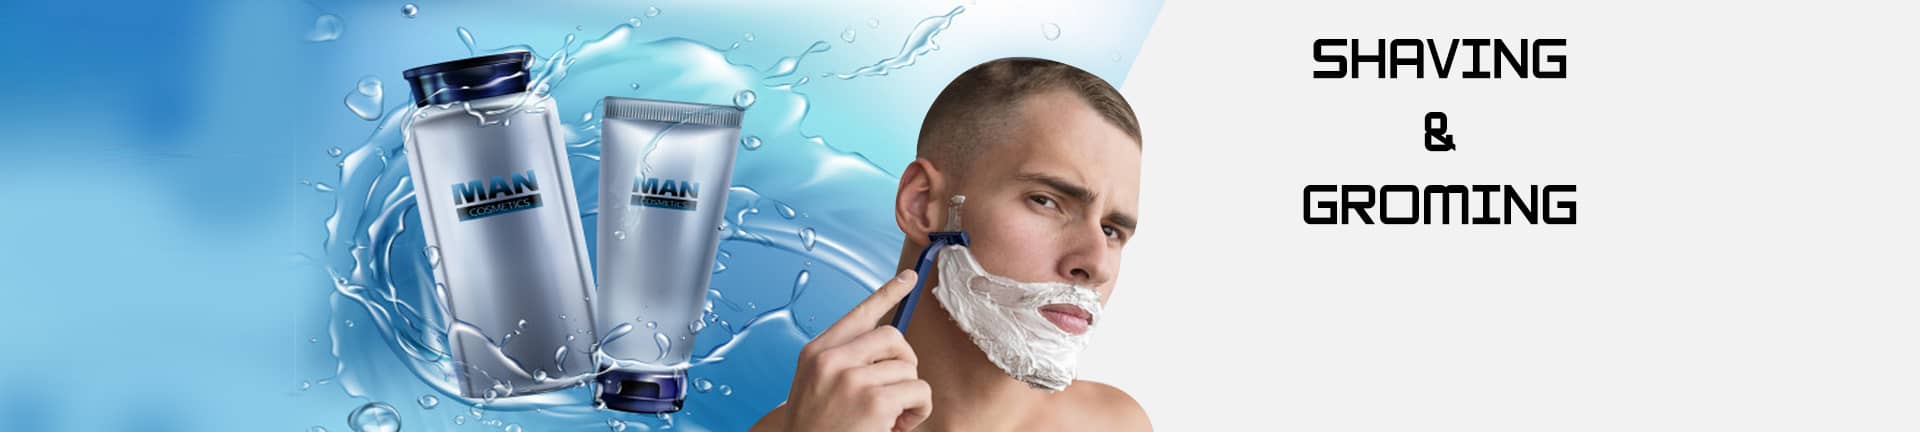 Men's Shaving & grooming Products Price in Pakistan - Kayazar